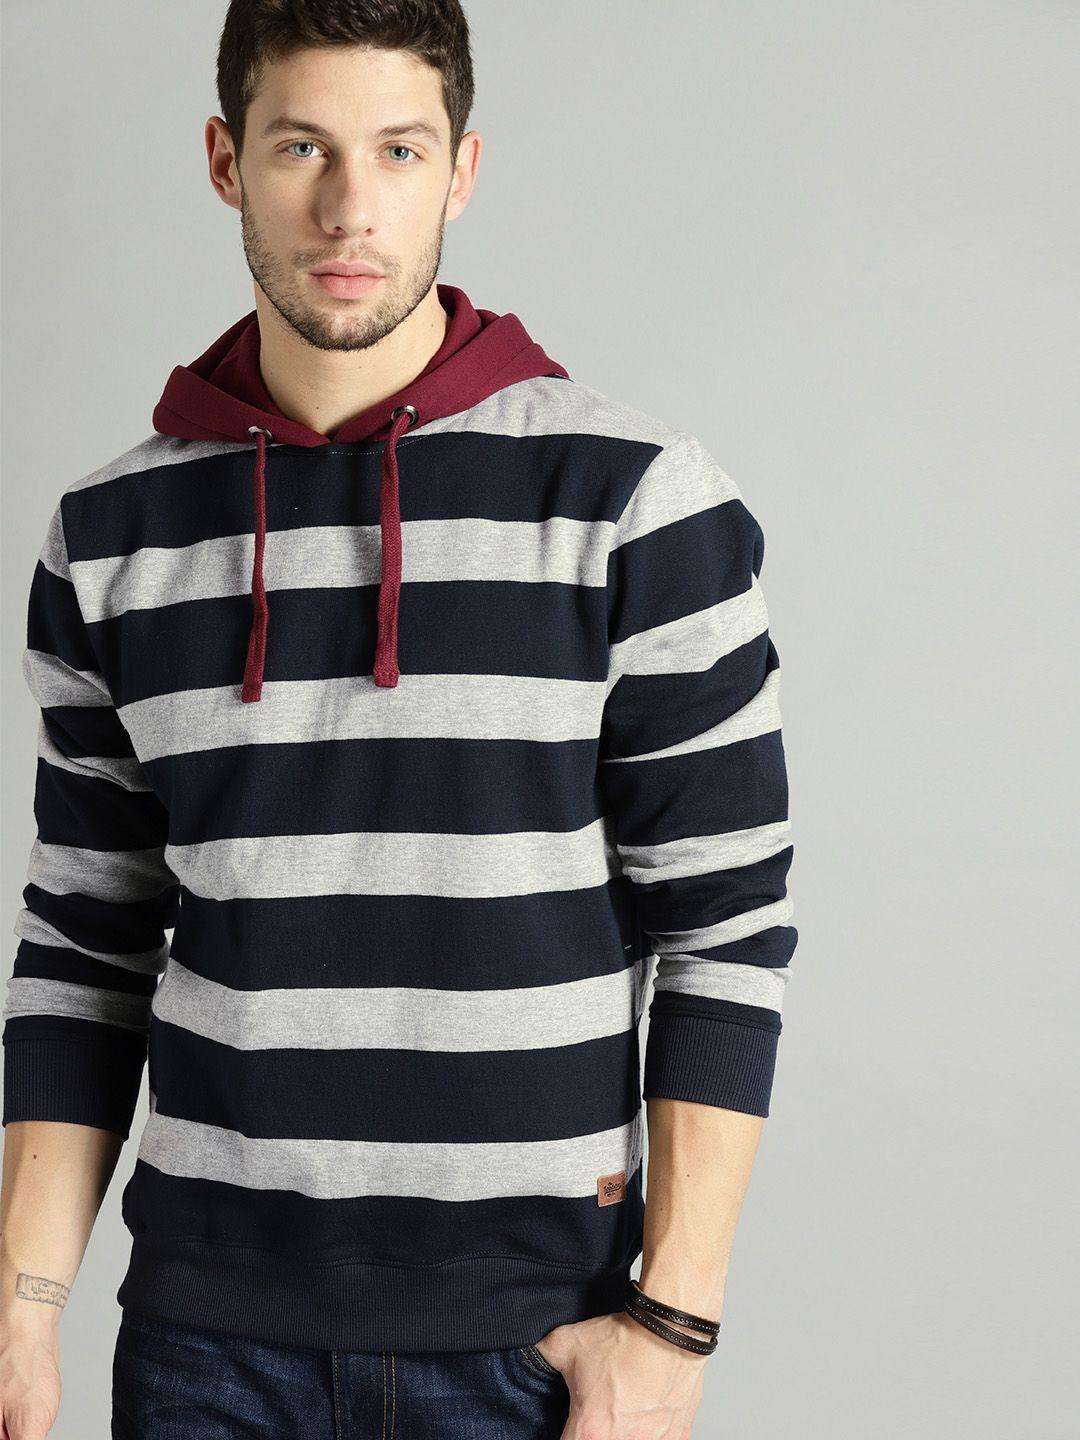 the roadster lifestyle co men grey melange & navy blue striped hooded sweatshirt